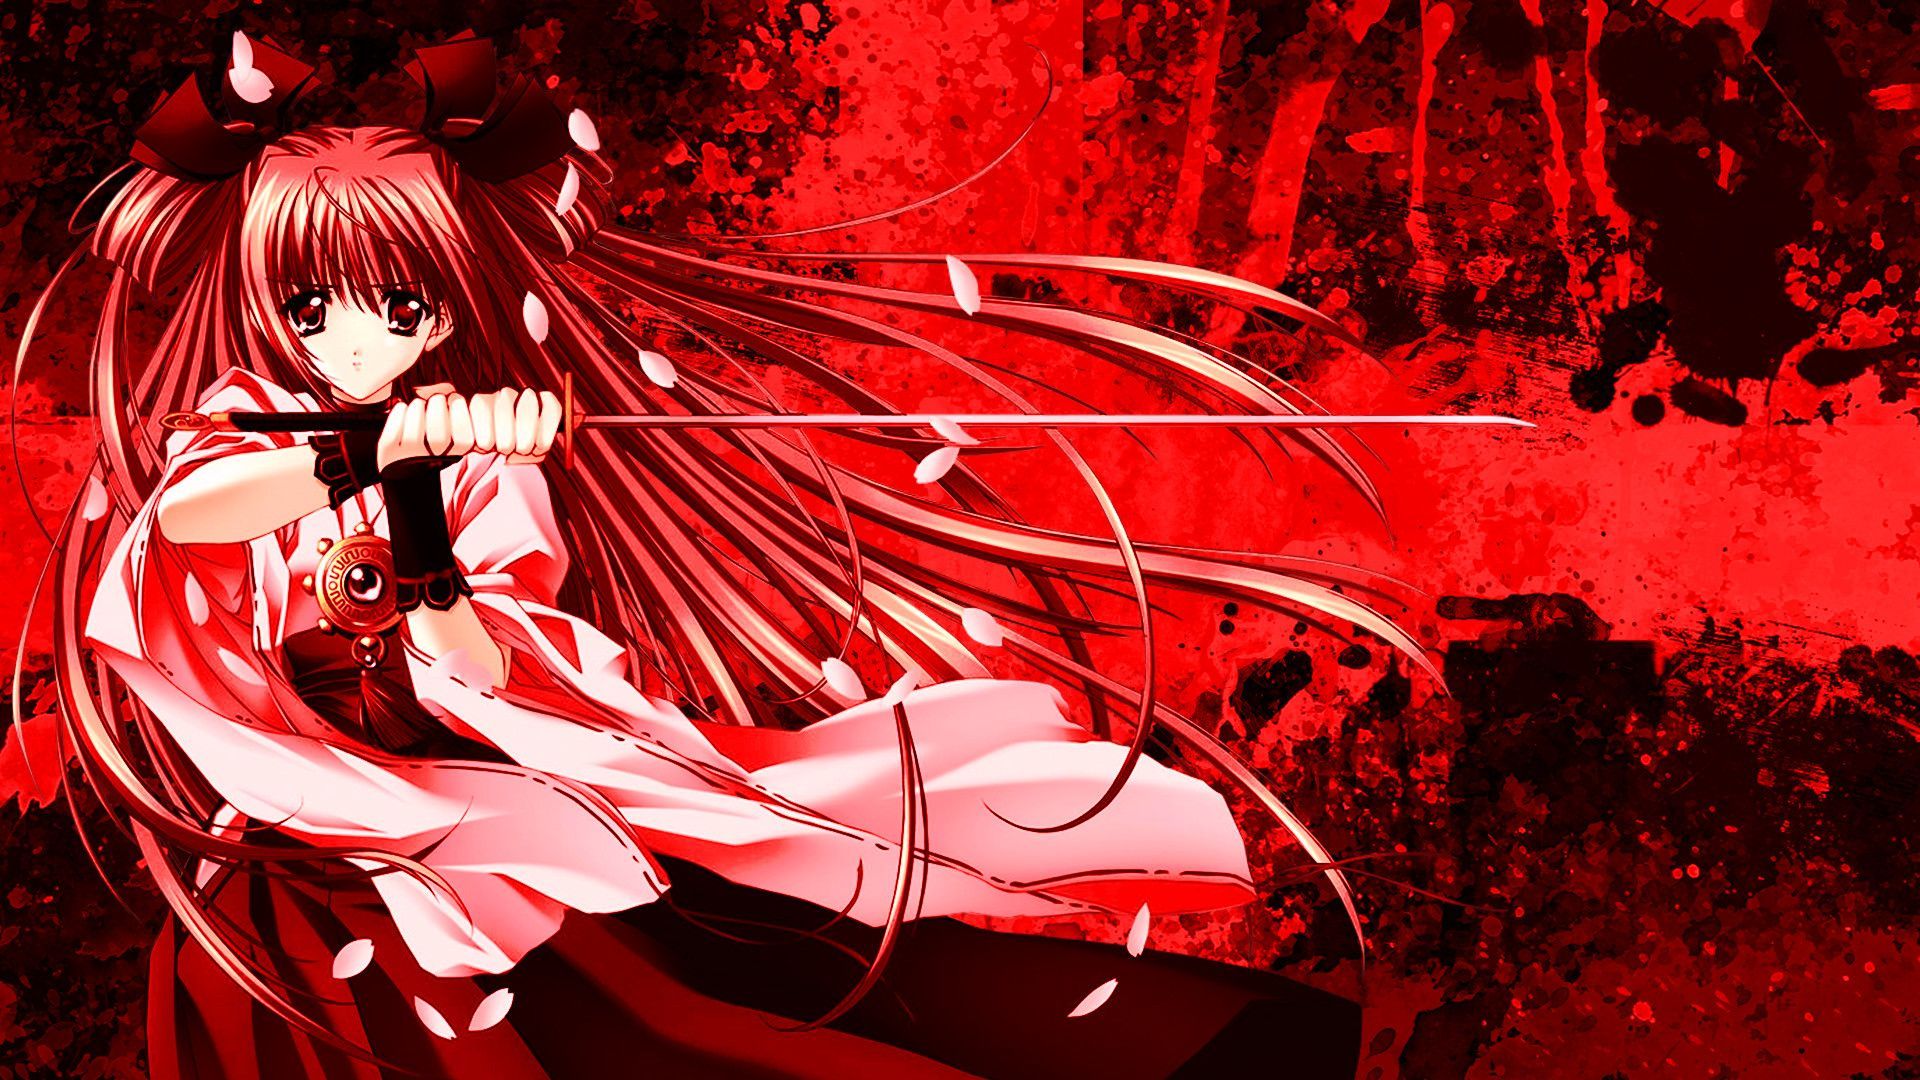 Dark Red and Black Anime Girl | Sticker, dark anime girl - thirstymag.com